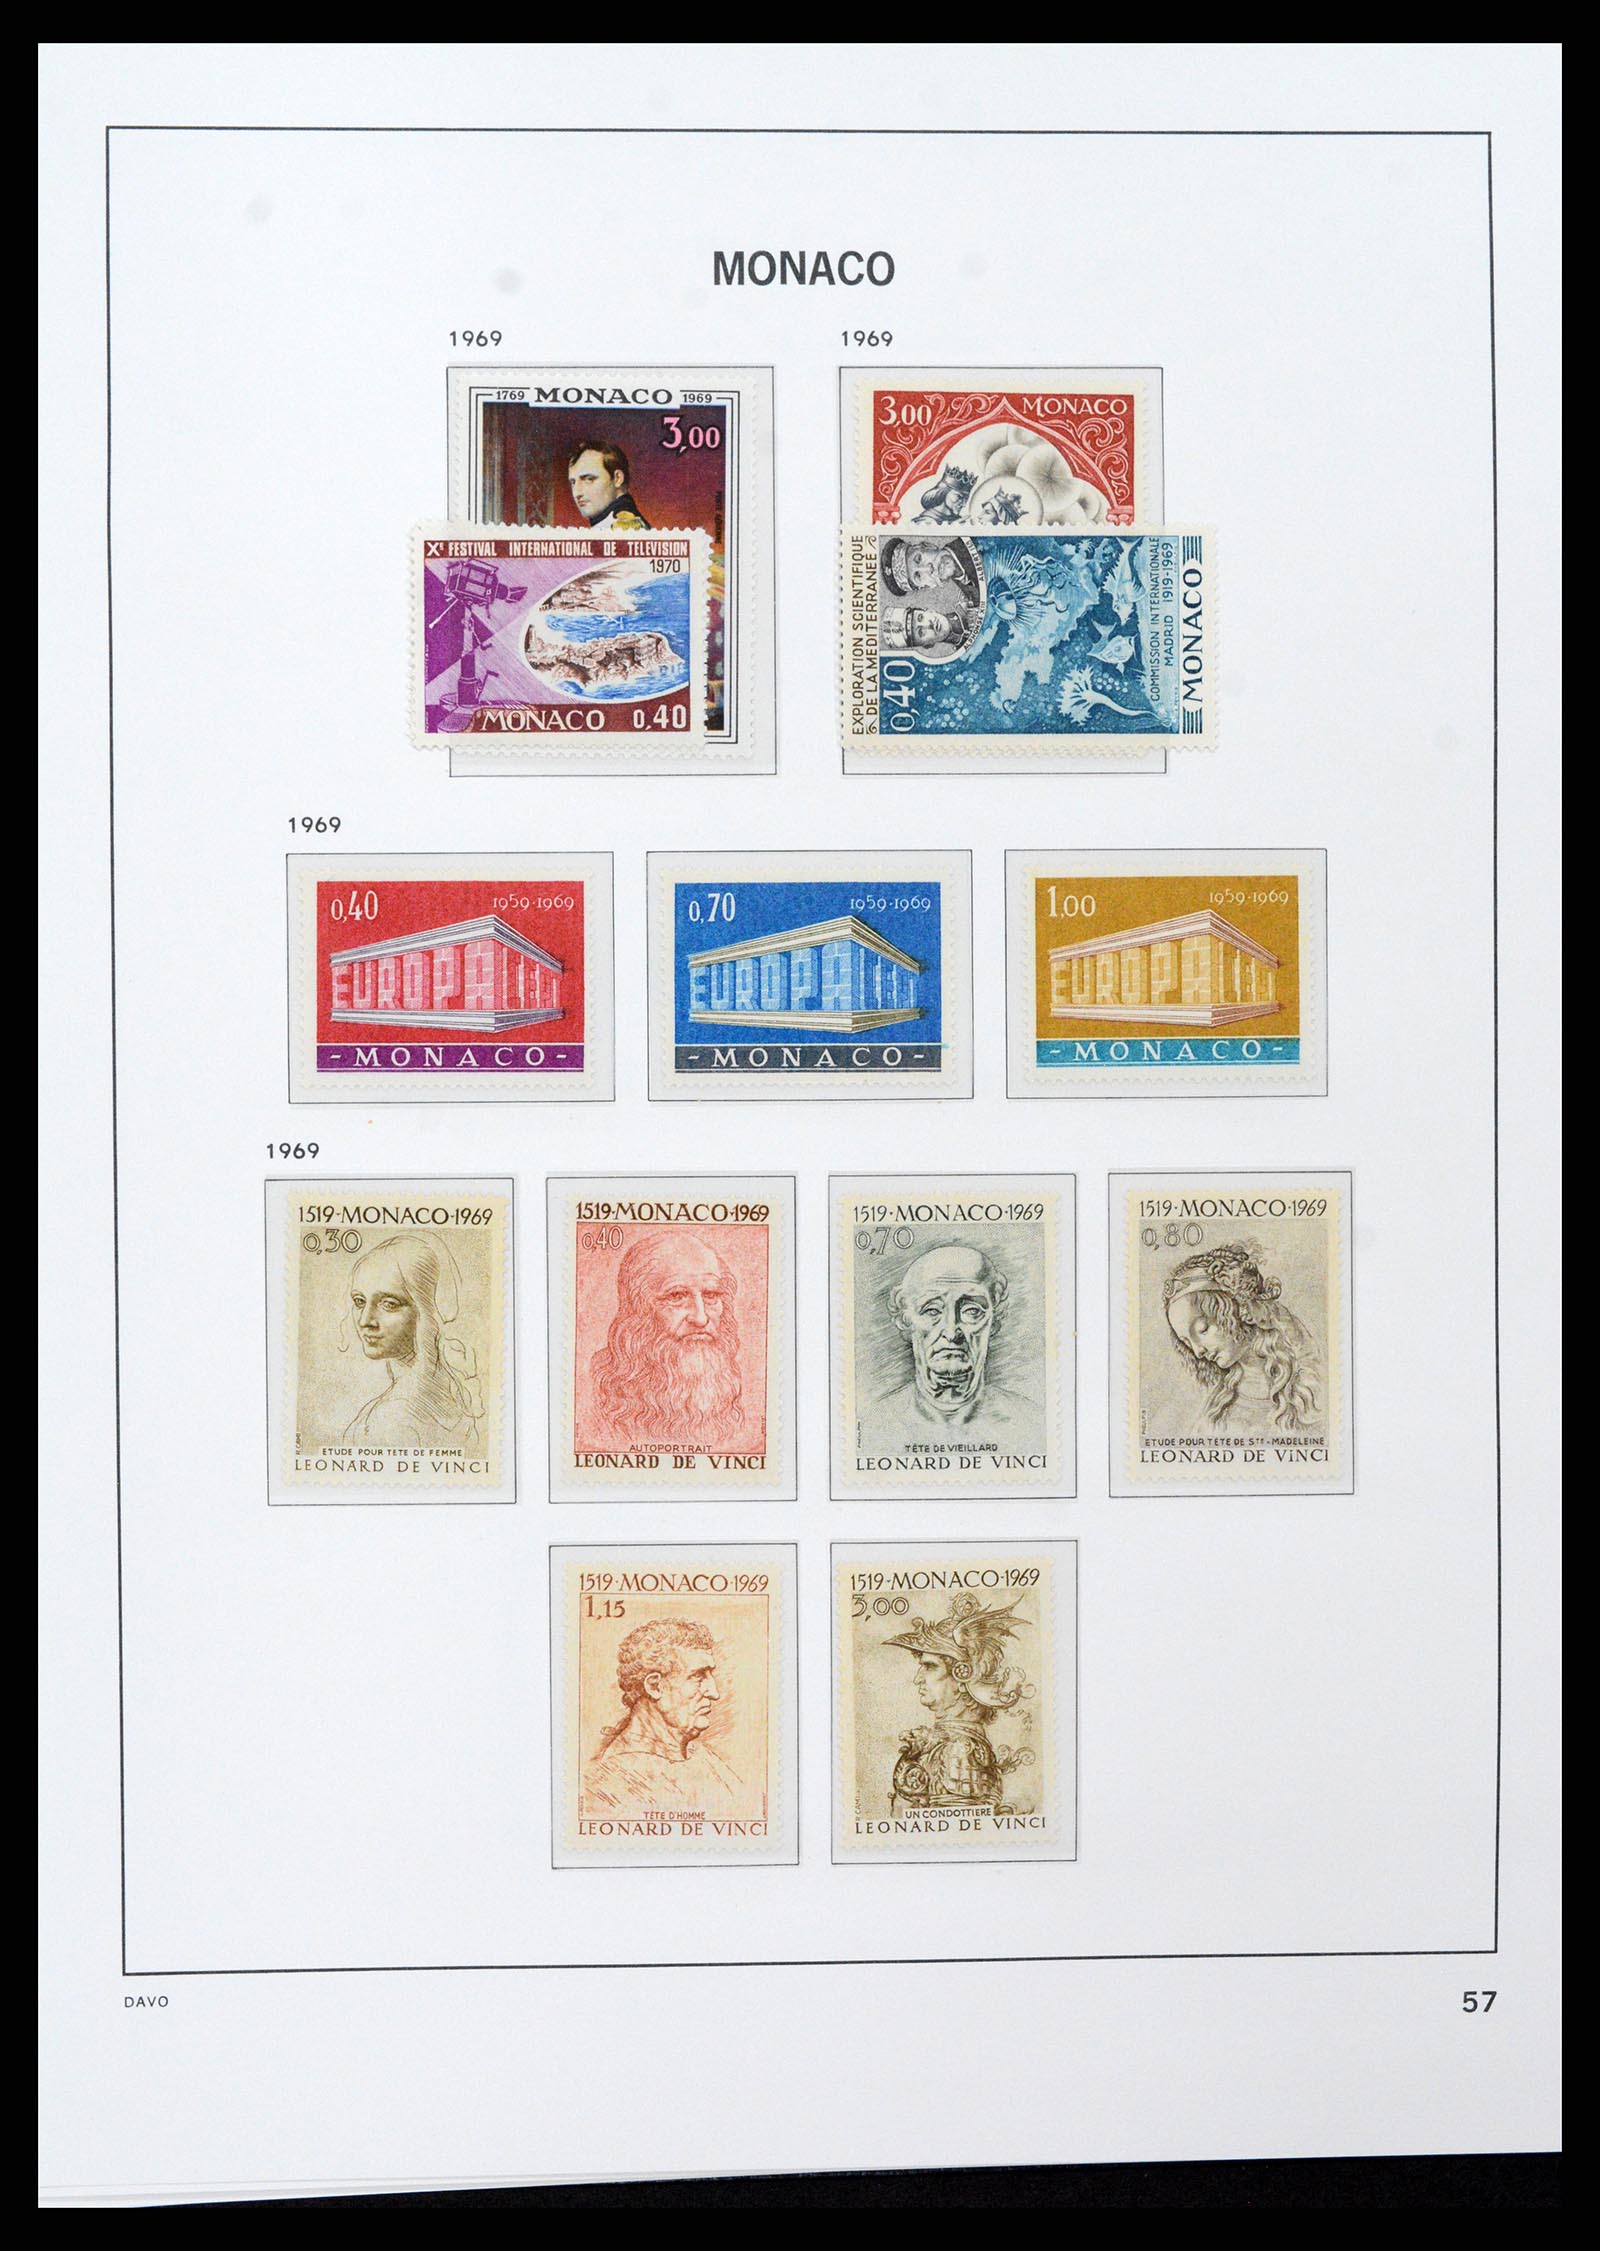 37279 057 - Stamp collection 37279 Monaco 1885-1969.